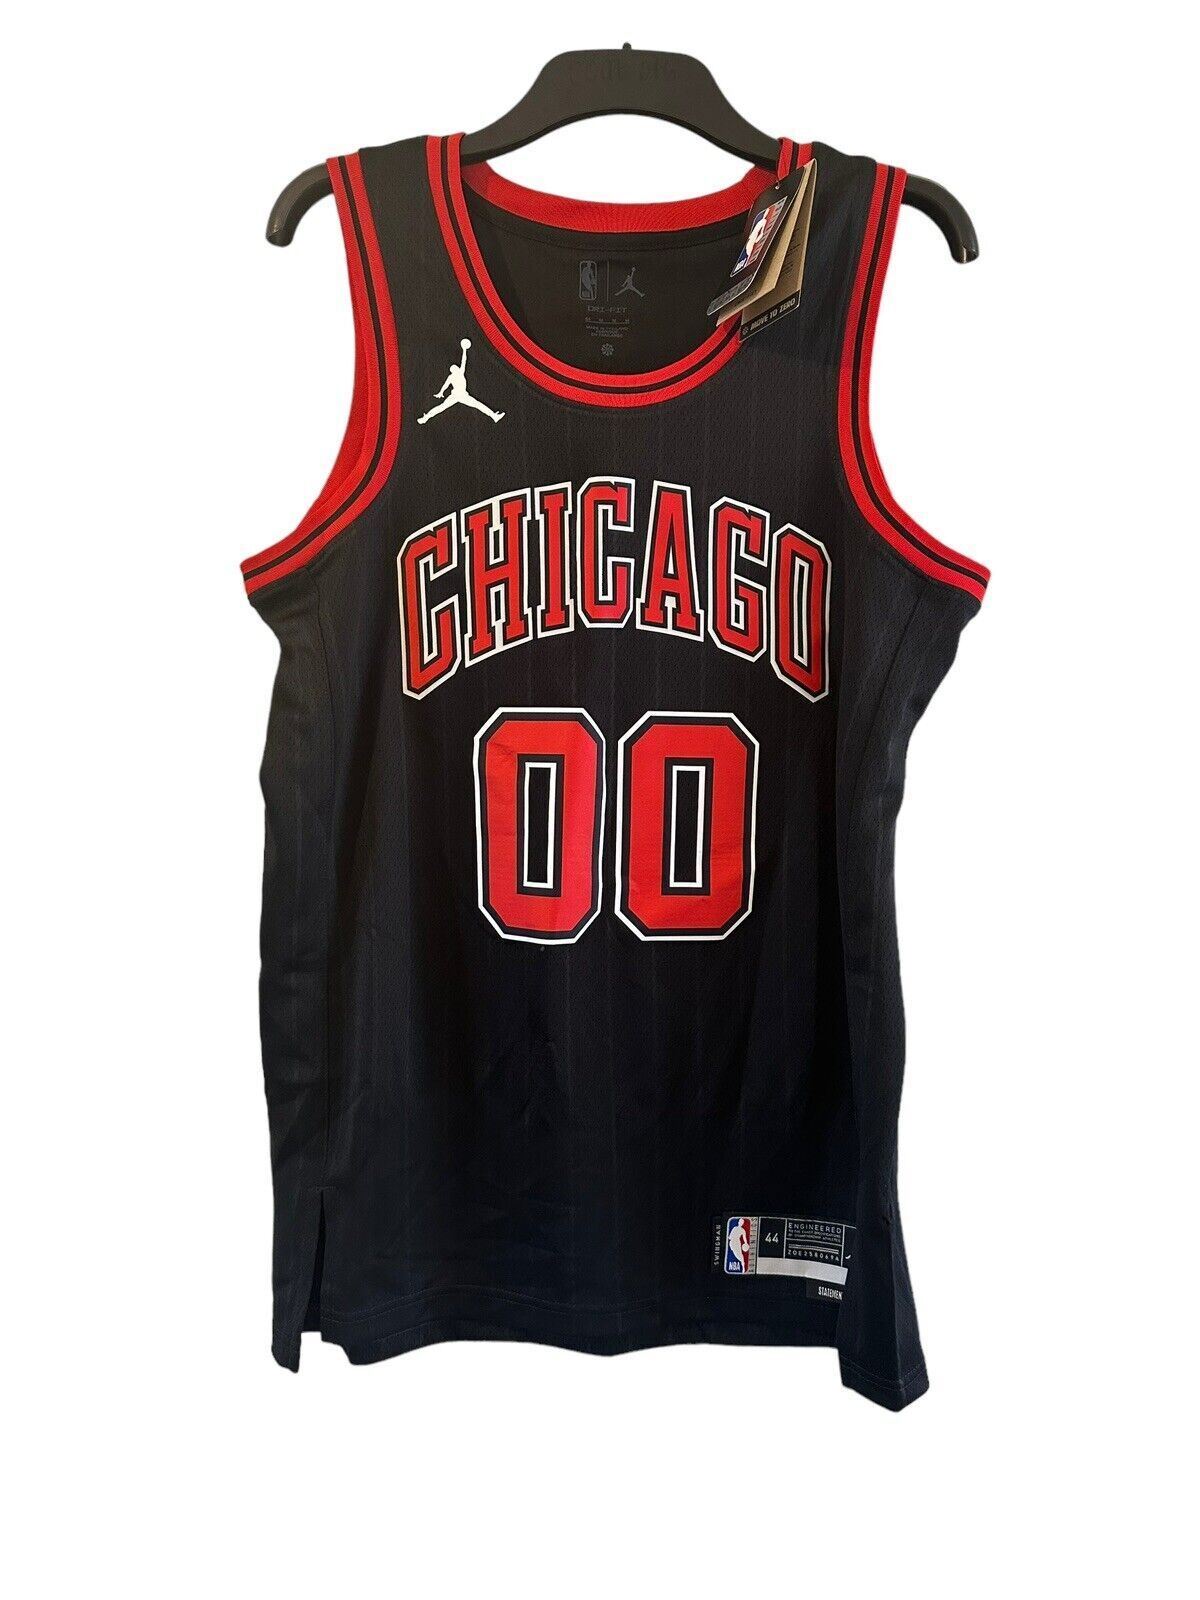 Nike Jordan NBA Chicago Bulls Statement Edition Jersey GHIGO 00 Mens M *DF*